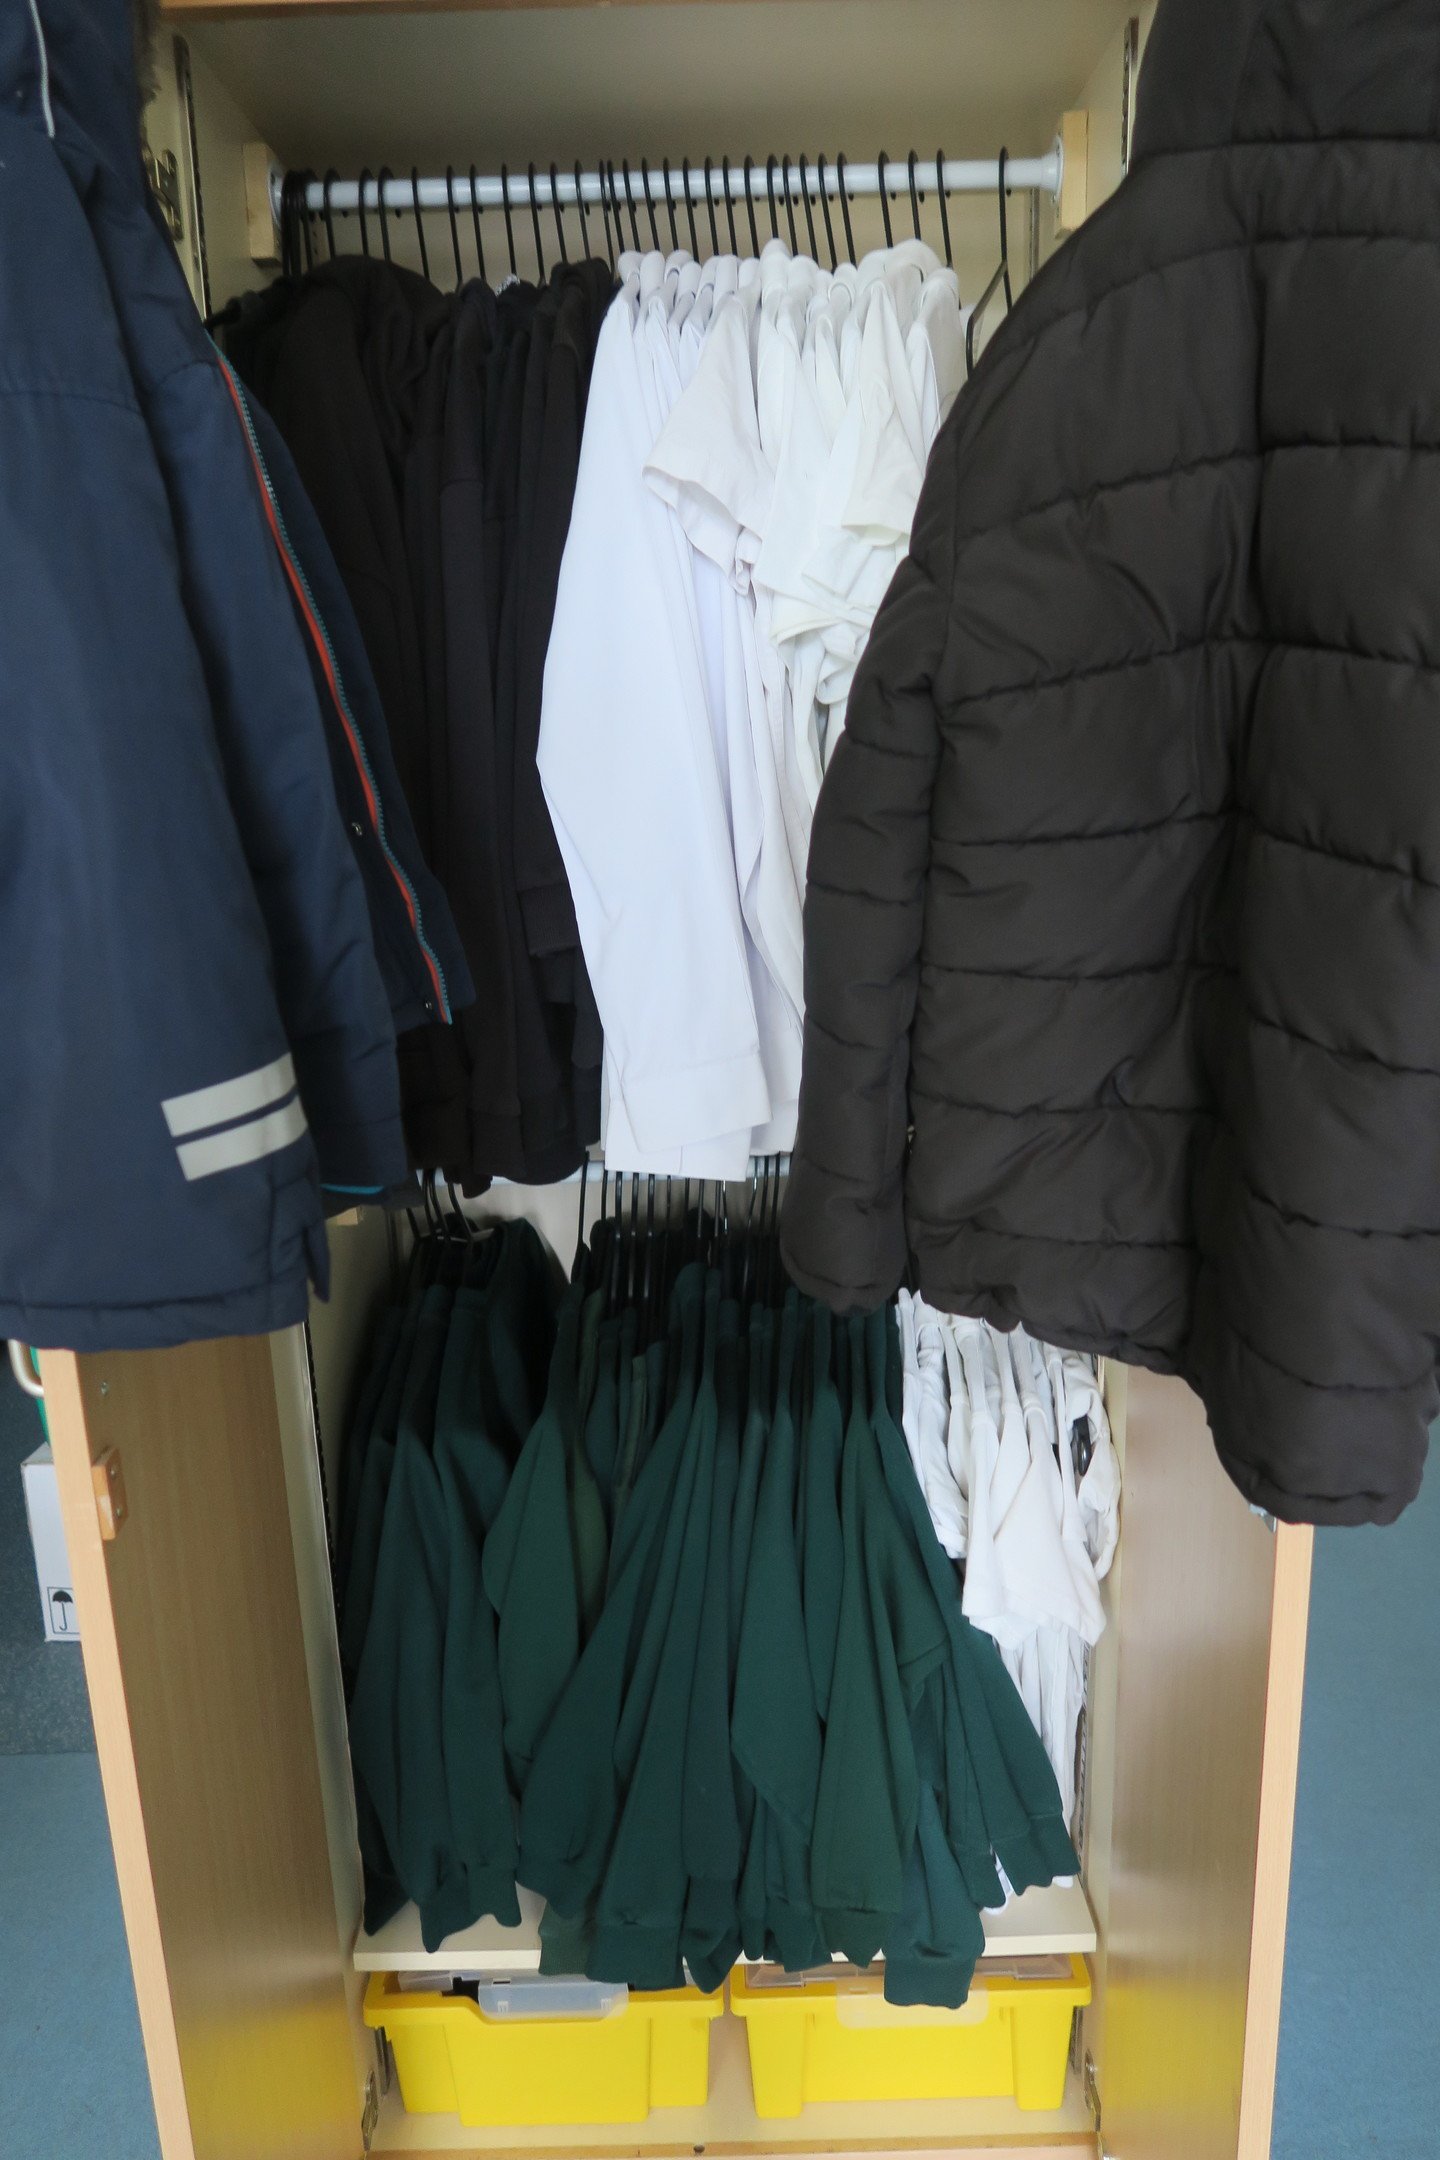 Donated School Uniform in 'The Cupboard'